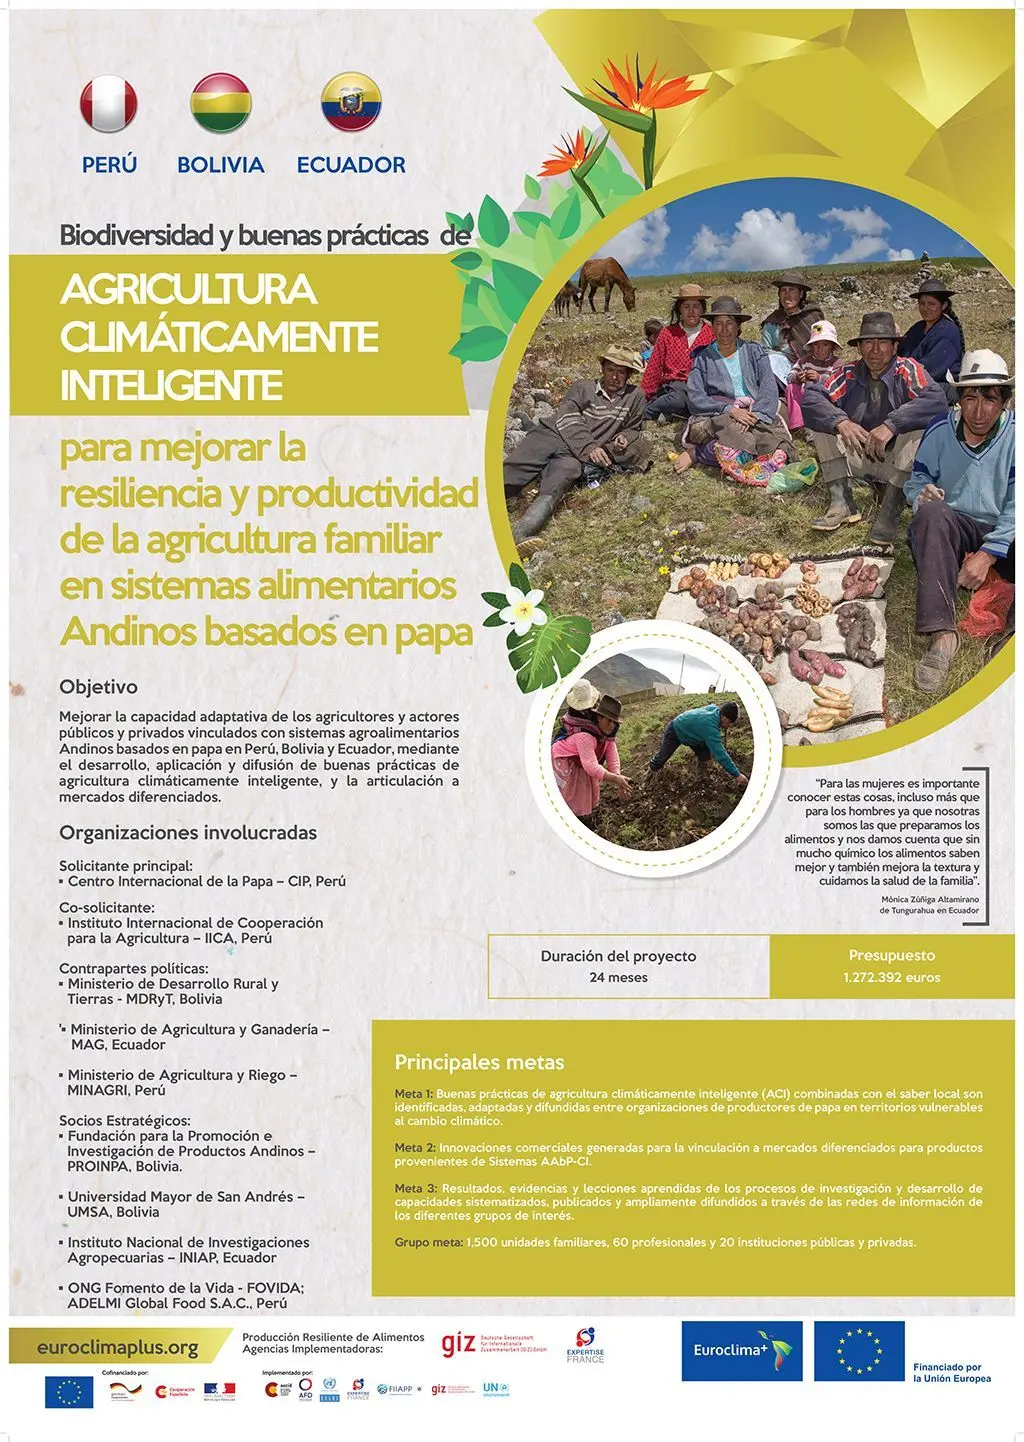 agricultura climaticamente inteligente en bolivia - Qué tipo de agricultura hay en Bolivia